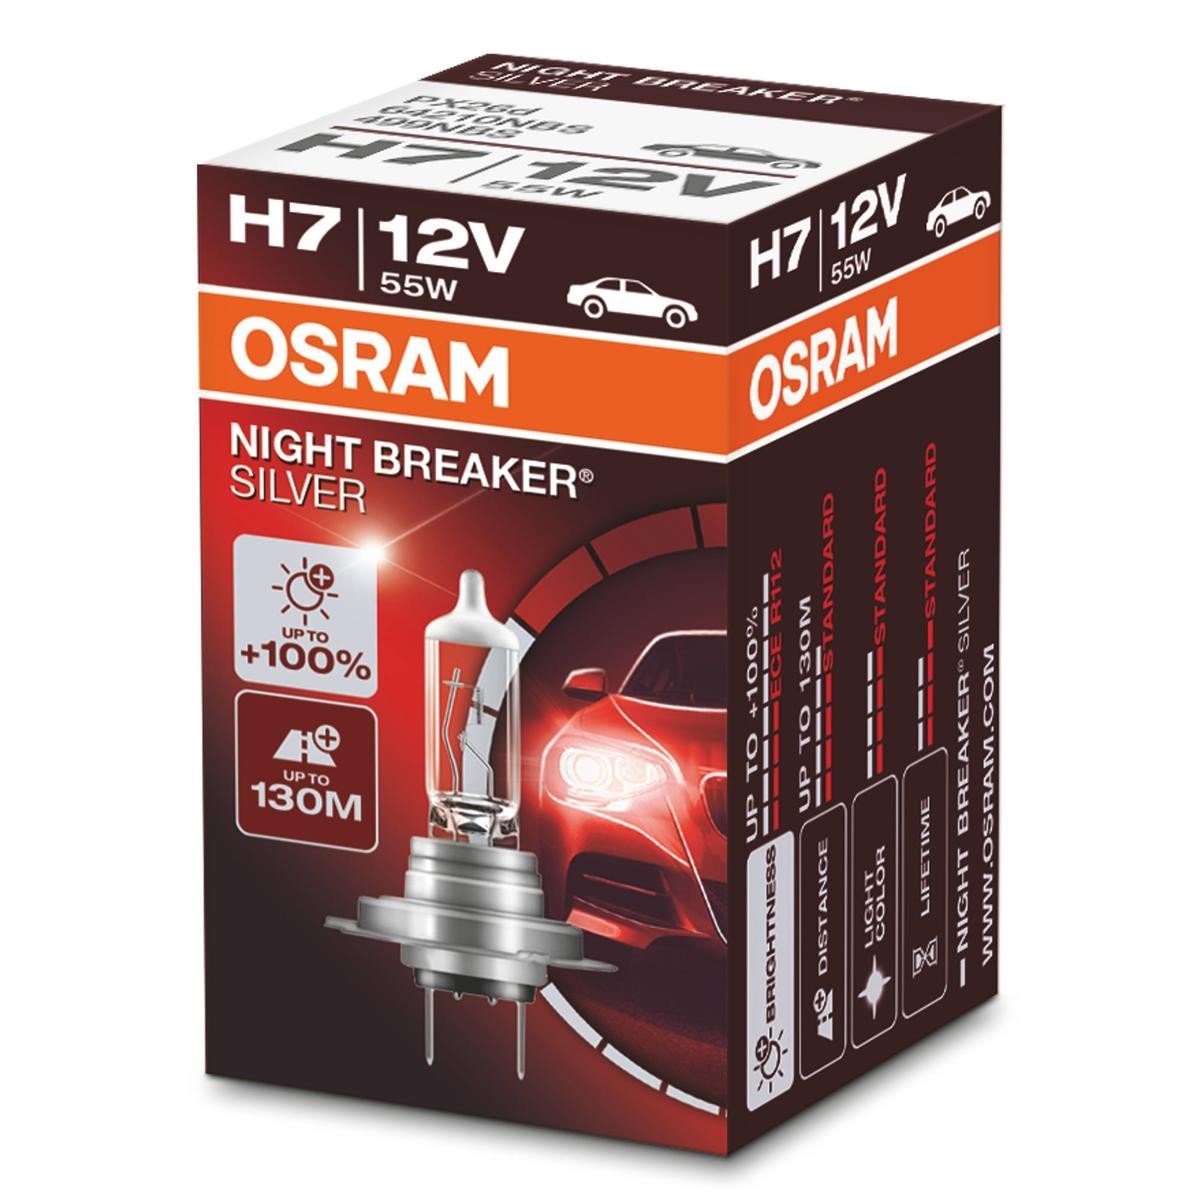 Land Rover RANGE ROVER OSRAM Headlight bulb price online